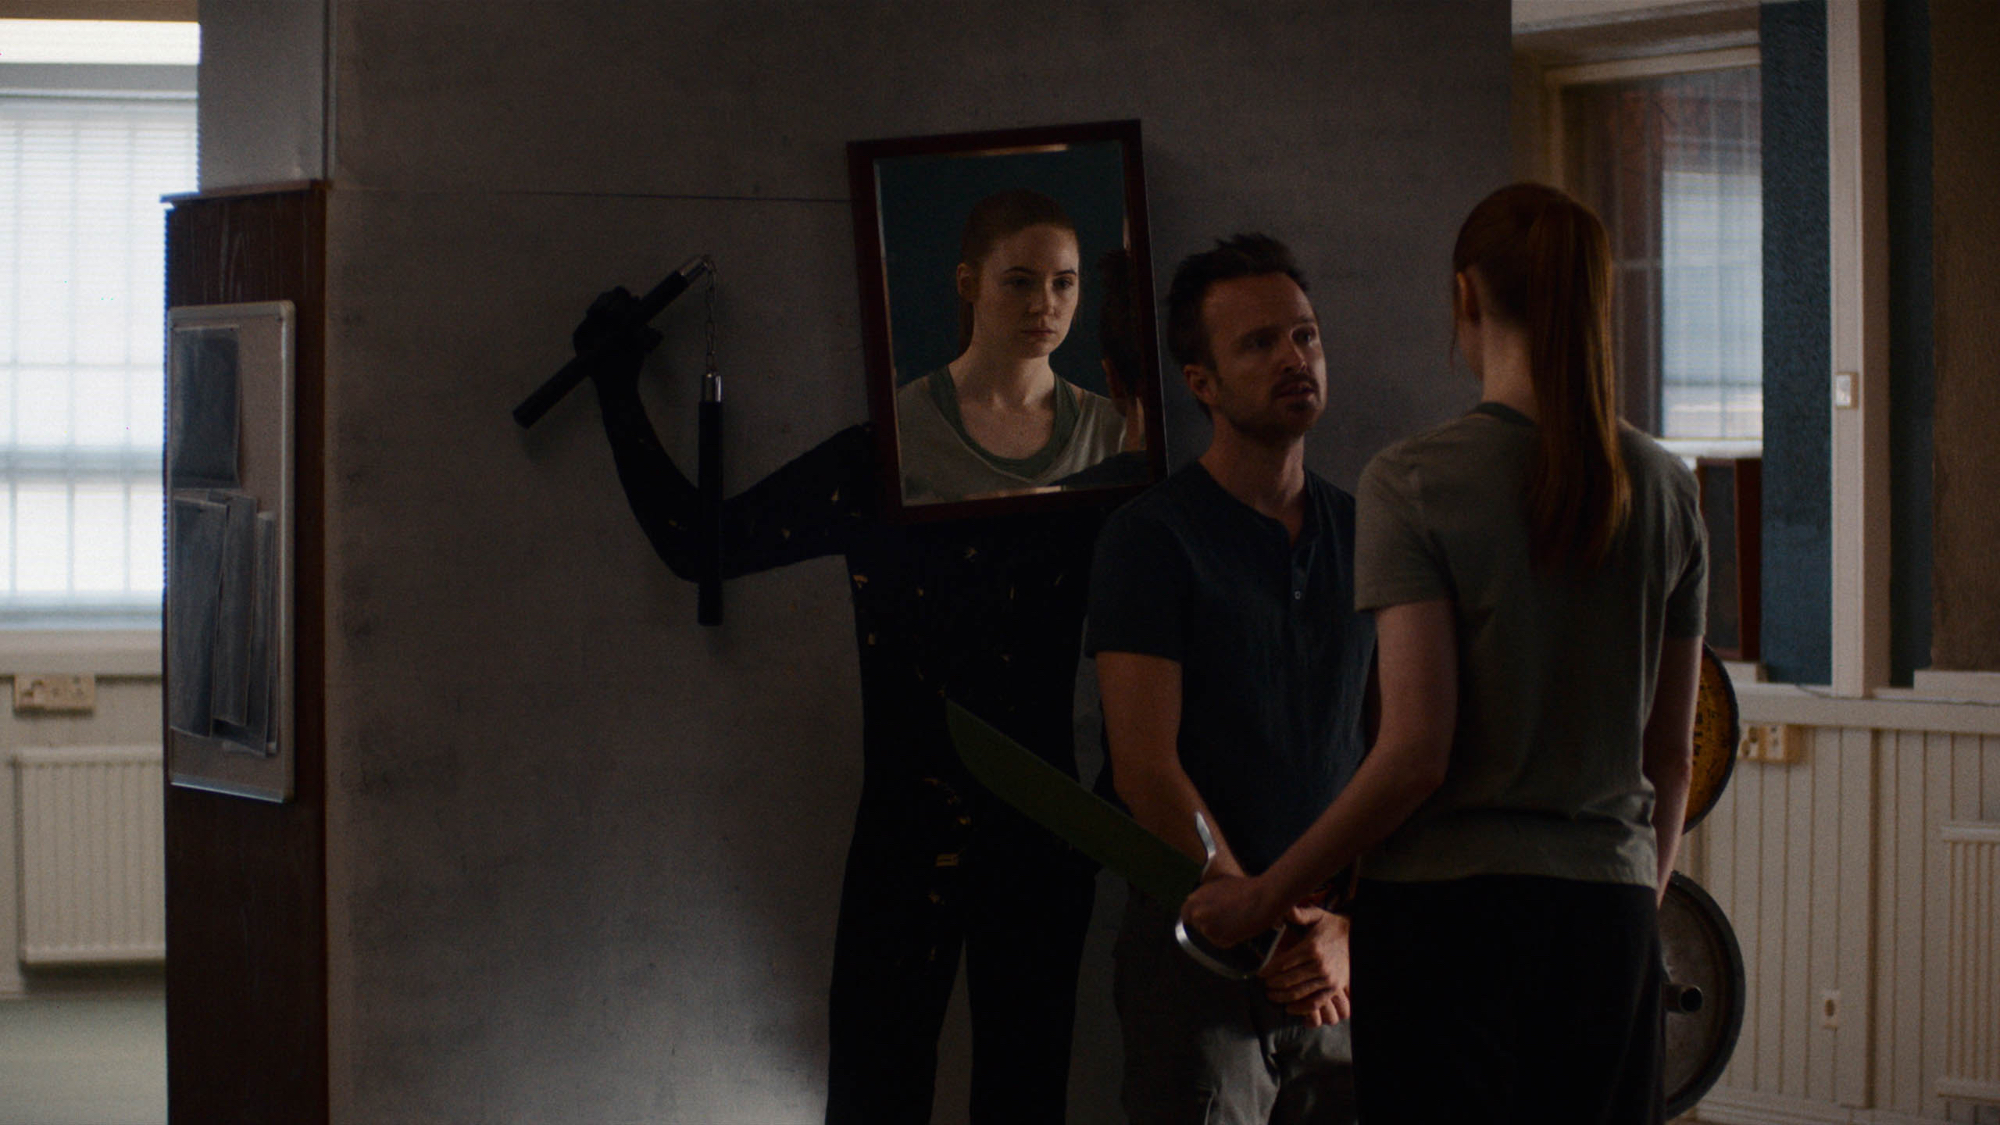 'Dual' Aaron Paul as Trent and Karen Gillan as Sarah standing in front of mirror practicing